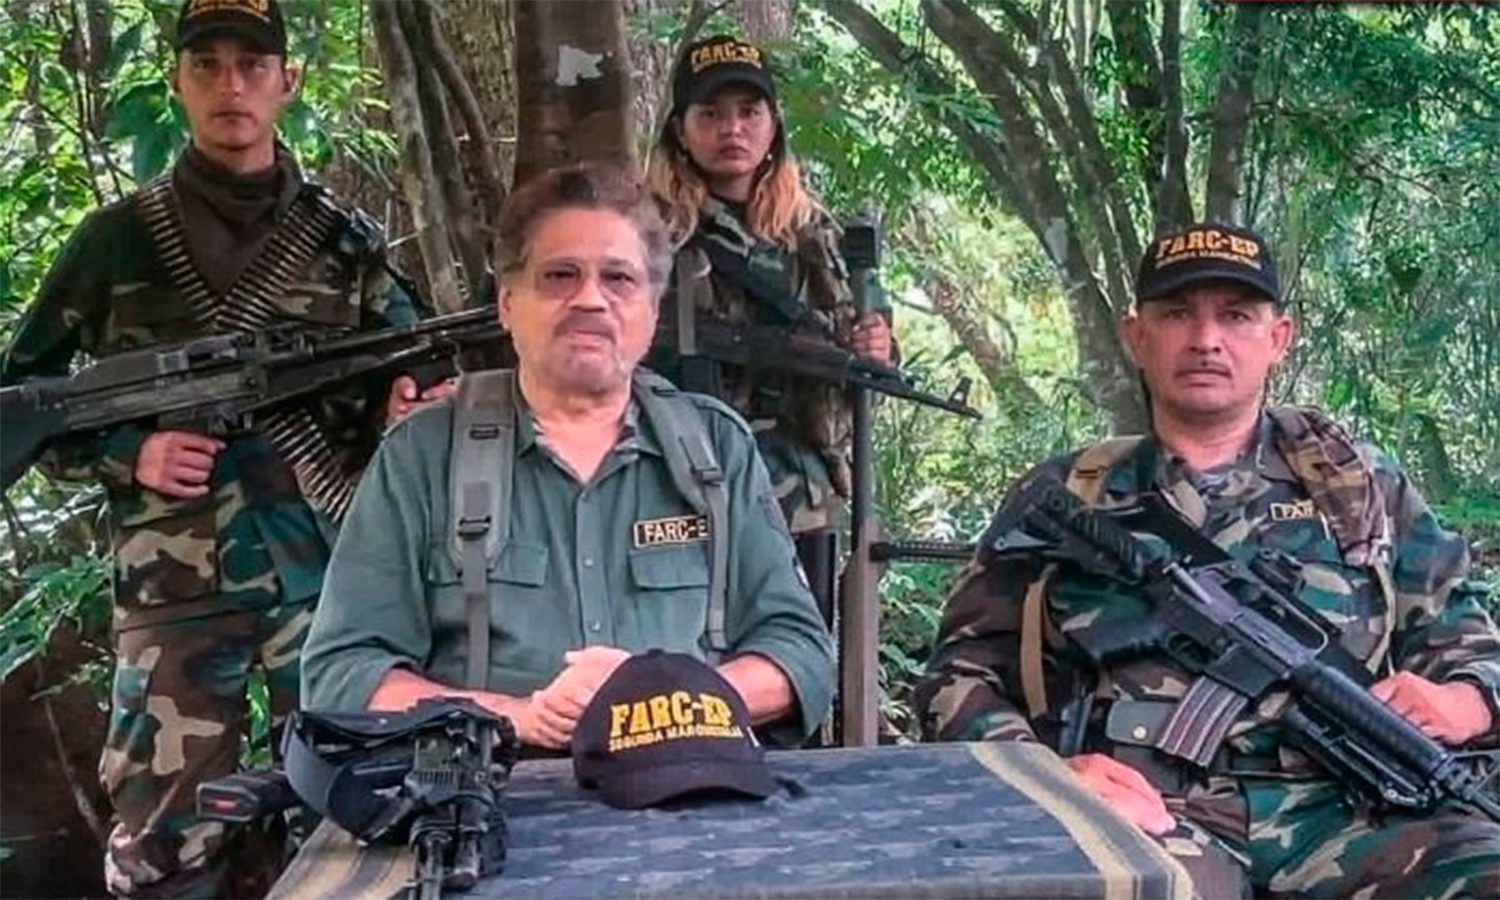 Iván Márquez, paranoico y arrinconado, ordenó asesinar a sus lugartenientes